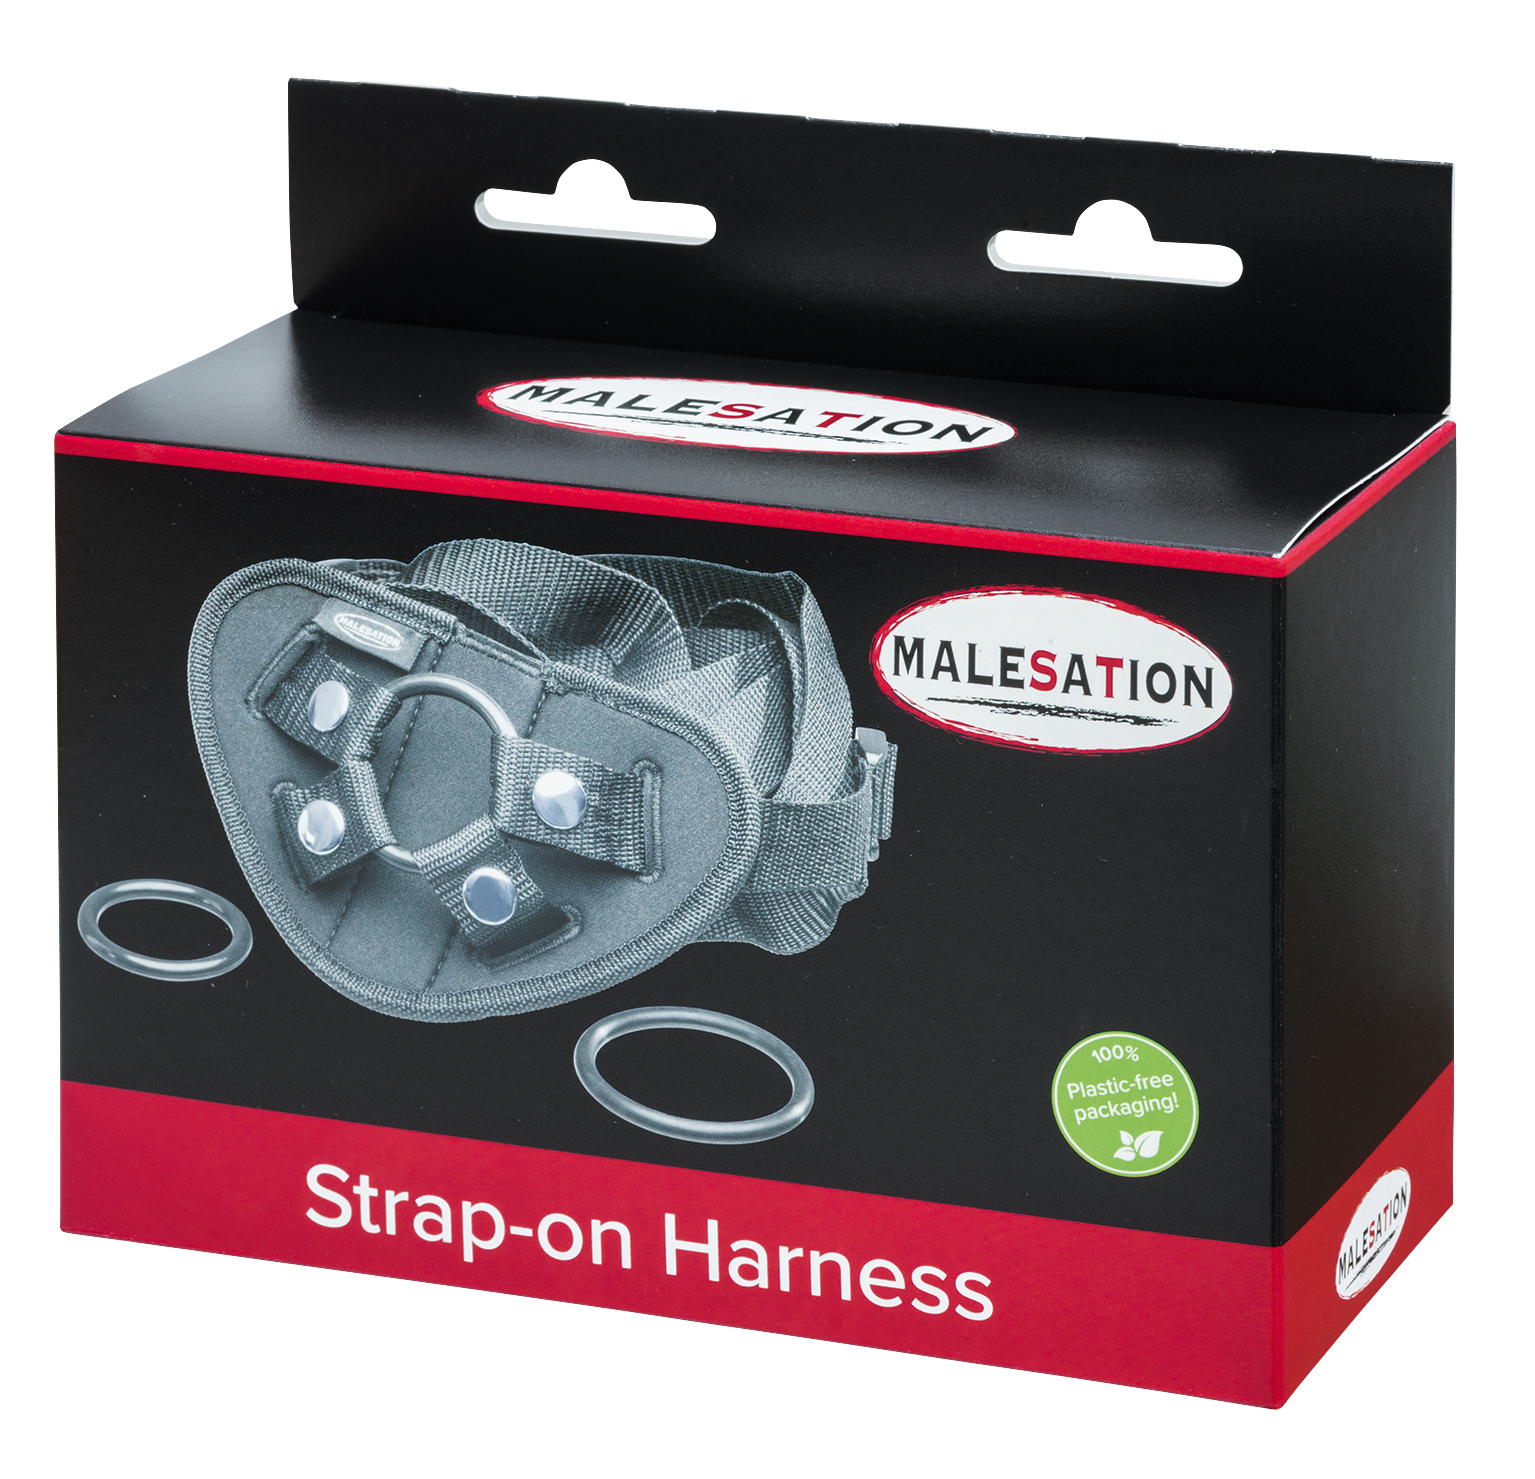 MALESATION Strap-on Harness